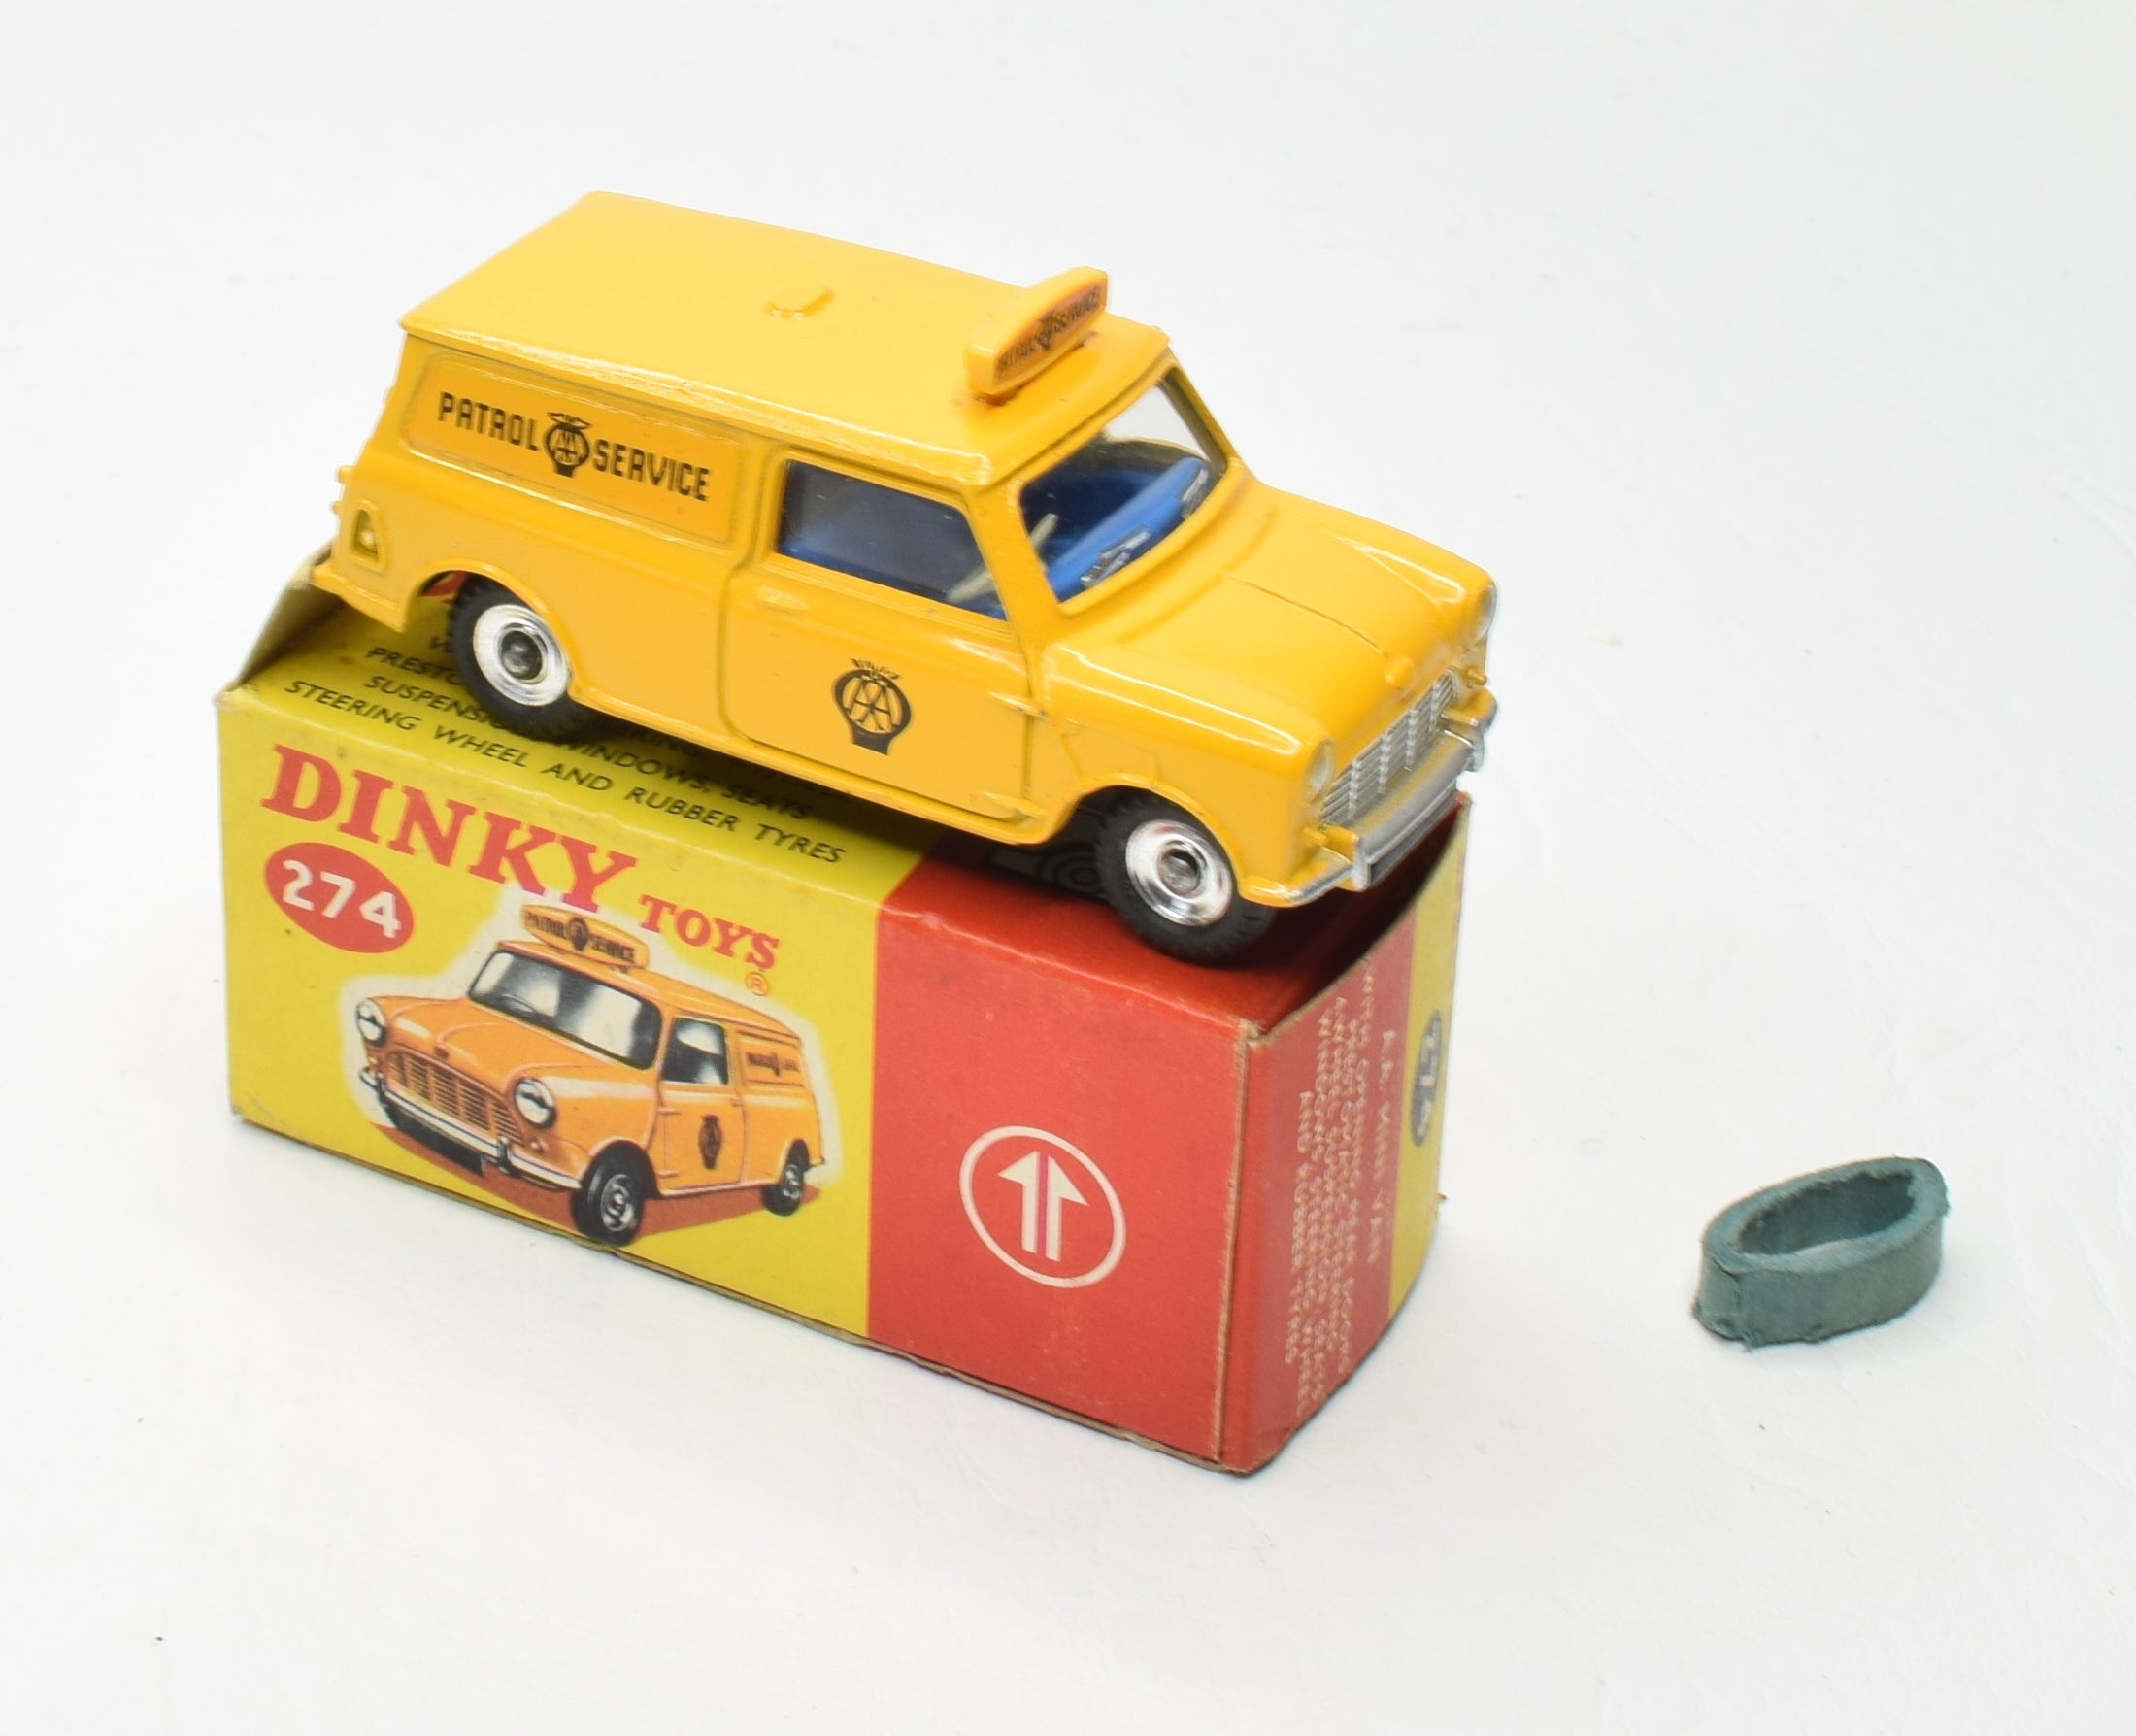 Dinky Toys 274 A.A Minivan Virtually Mint/Boxed – JK DIE-CAST MODELS